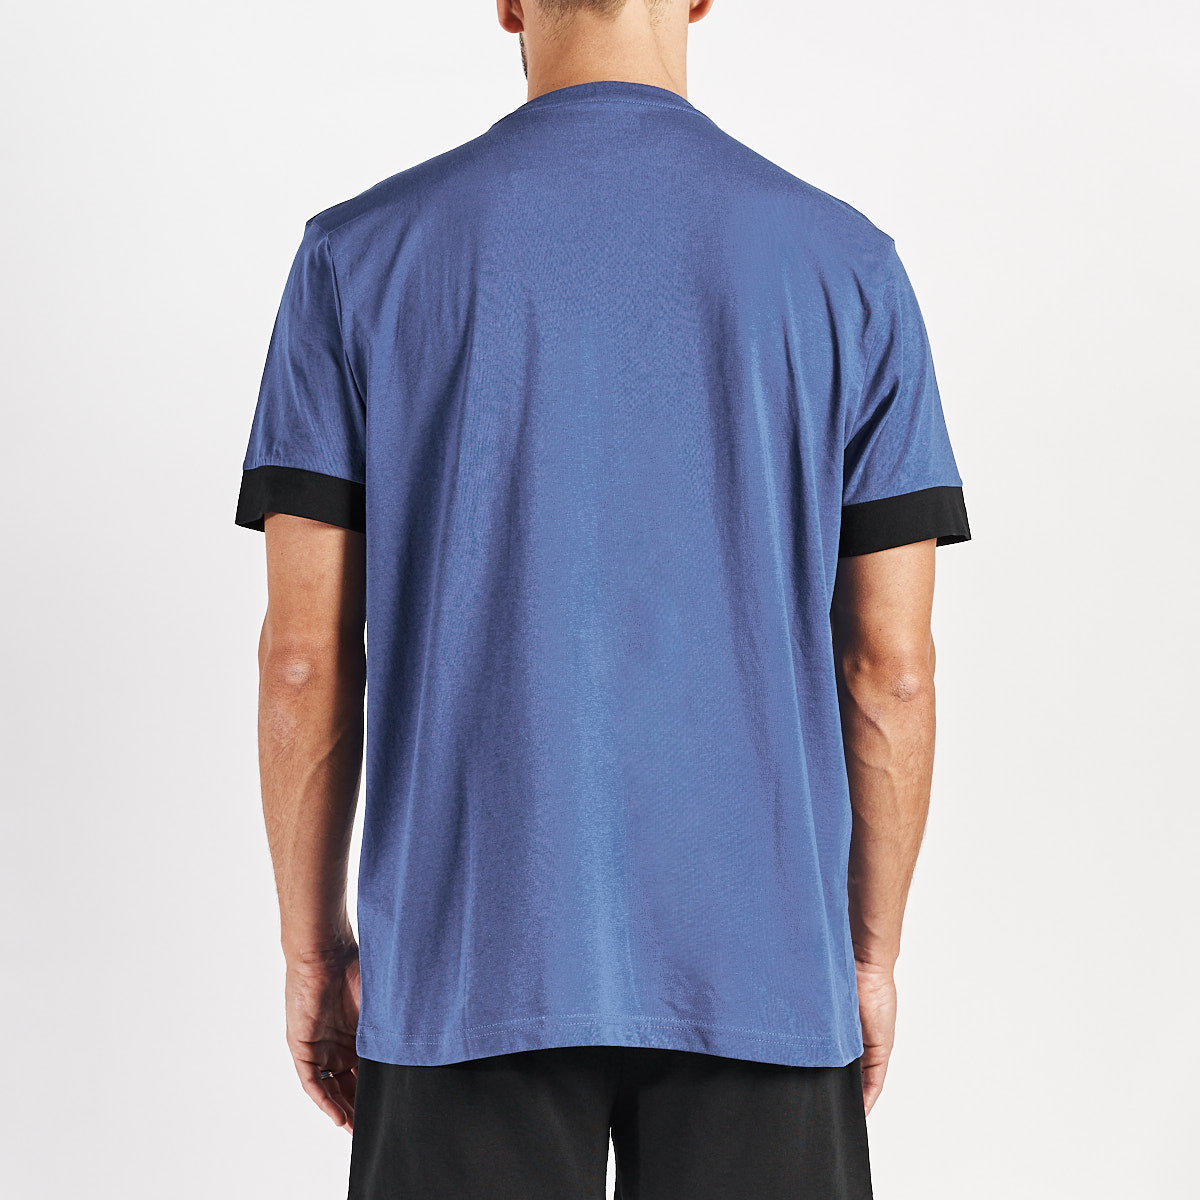 T-shirt Dlot Bleu Homme - Image 3